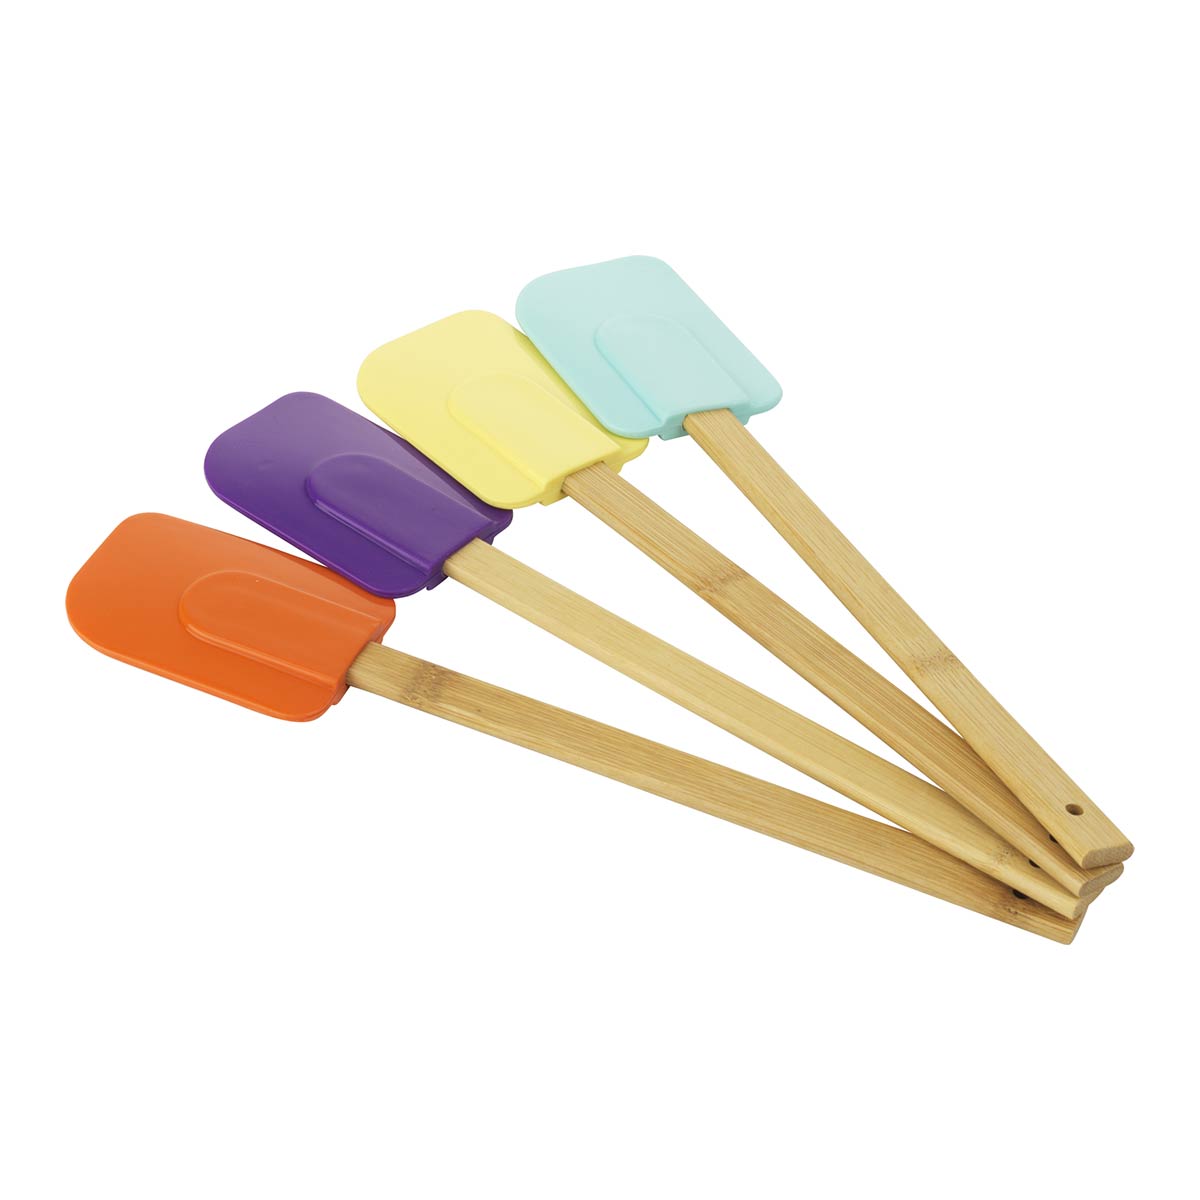 https://www.goodcook.com/media/catalog/product/e/v/everyday-silicone-spatulas-four-pack-main.jpg?auto=webp&format=pjpg